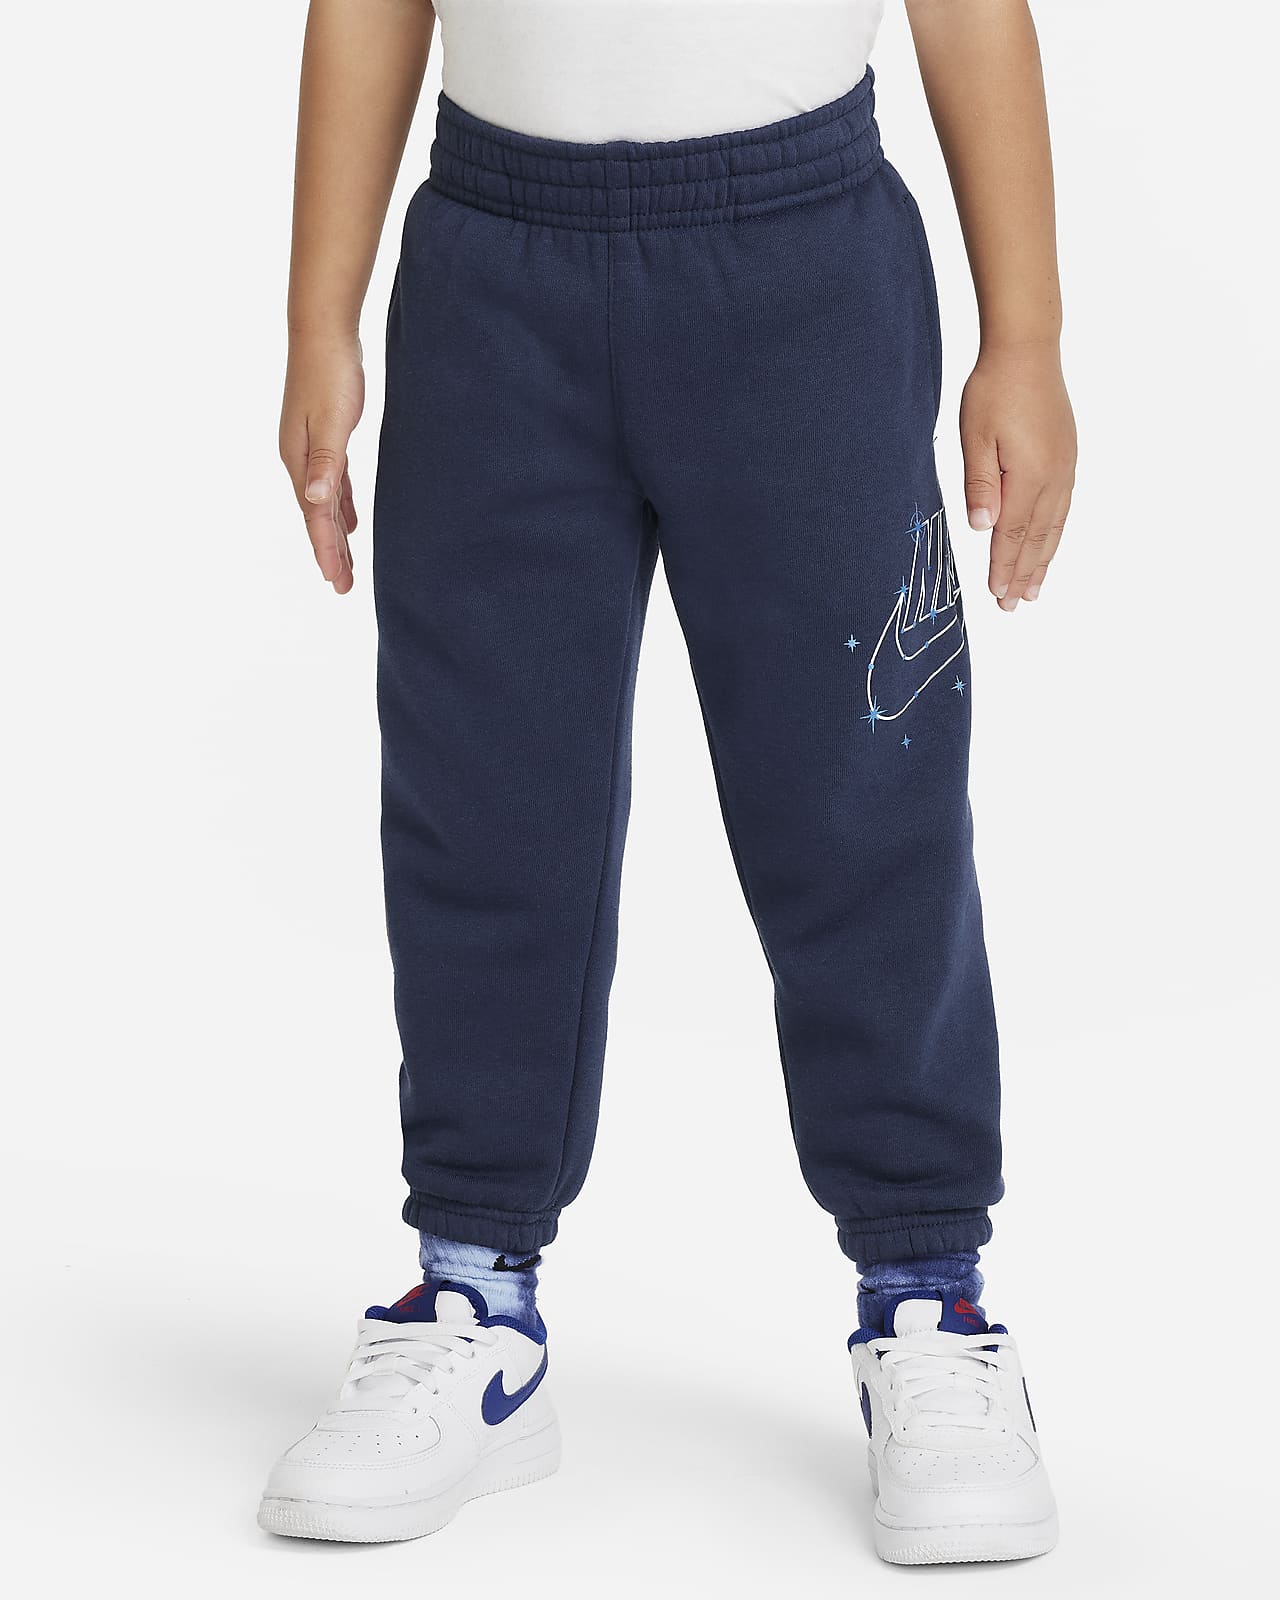 Nike Sportswear Shine Fleece Pants Hose für Kleinkinder